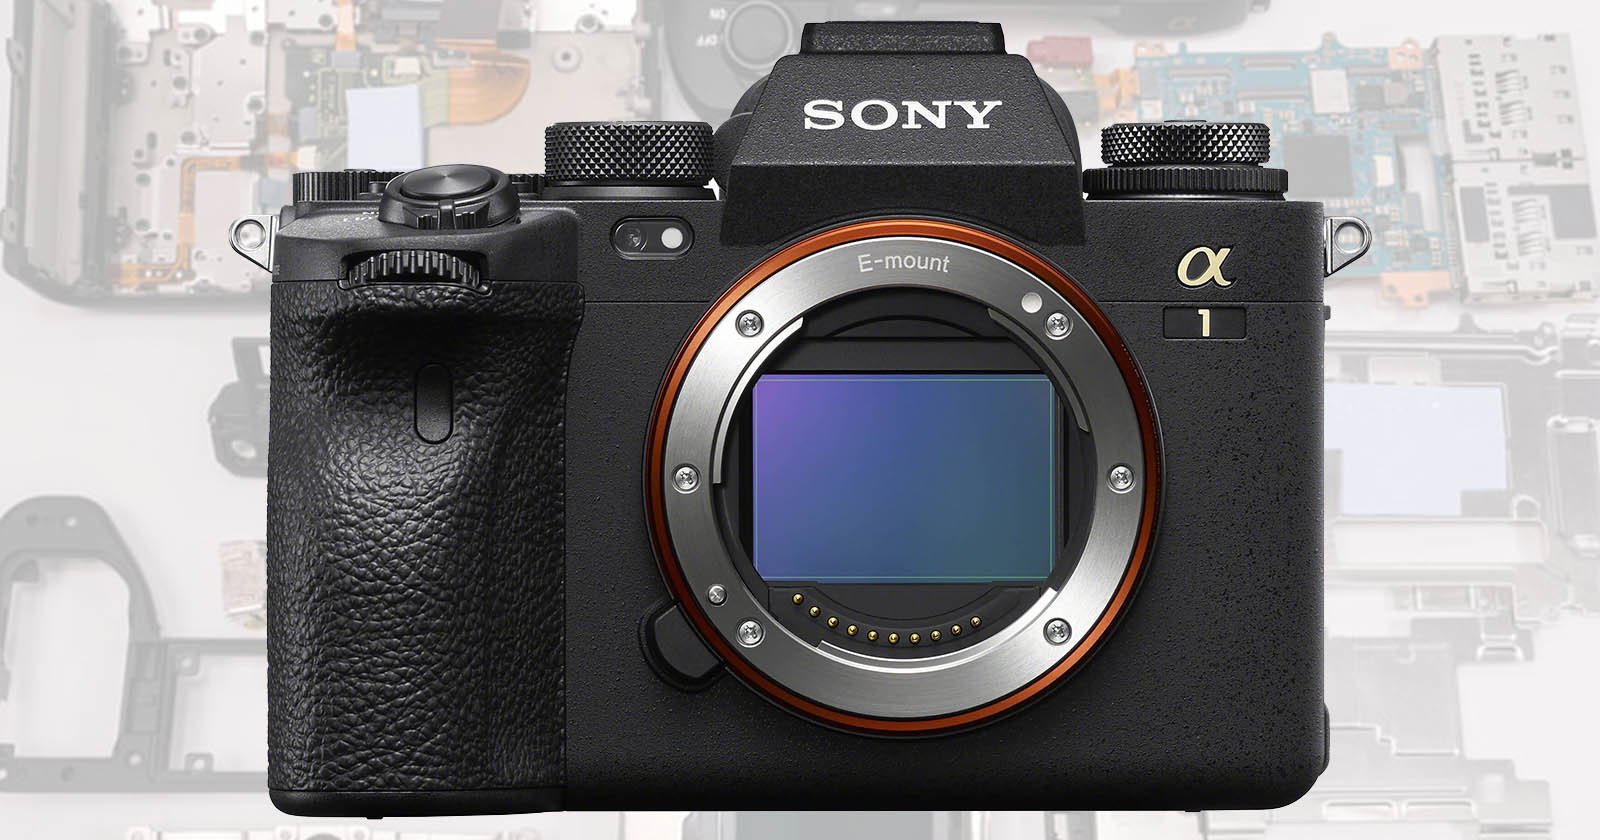 Sony Alpha 1 Teardown: The Inside of a Flagship Mirrorless Camera